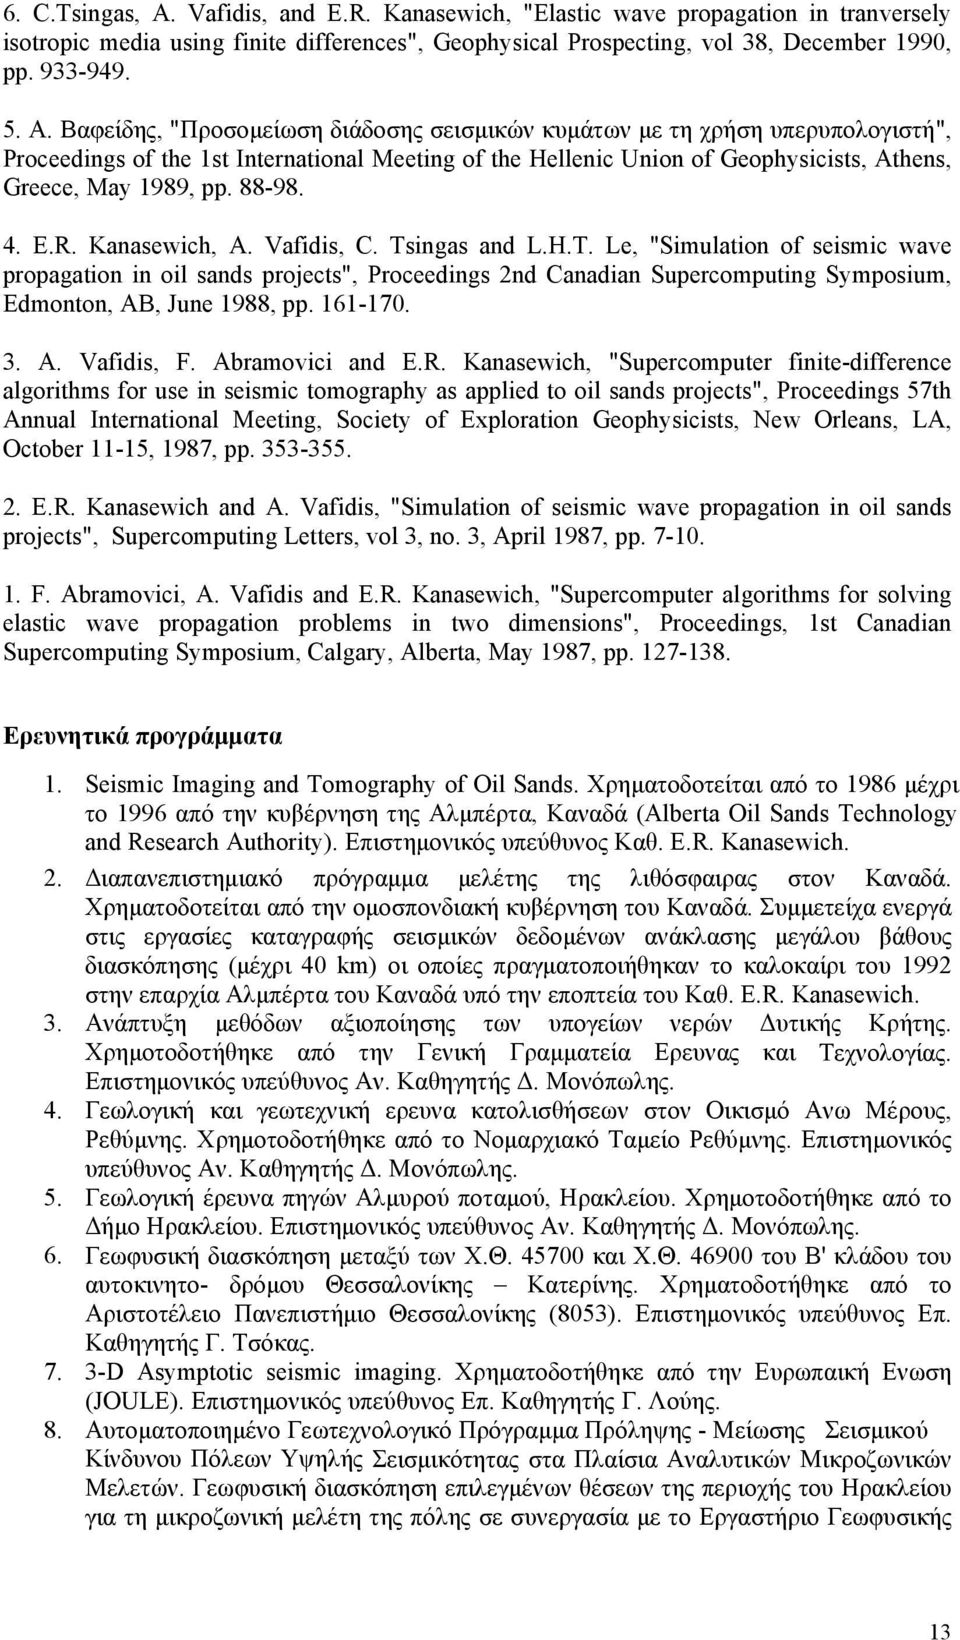 Bαφείδης, "Προσομείωση διάδοσης σεισμικών κυμάτων με τη χρήση υπερυπολογιστή", Proceedings of the 1st International Meeting of the Hellenic Union of Geophysicists, Athens, Greece, May 1989, pp. 88-98.